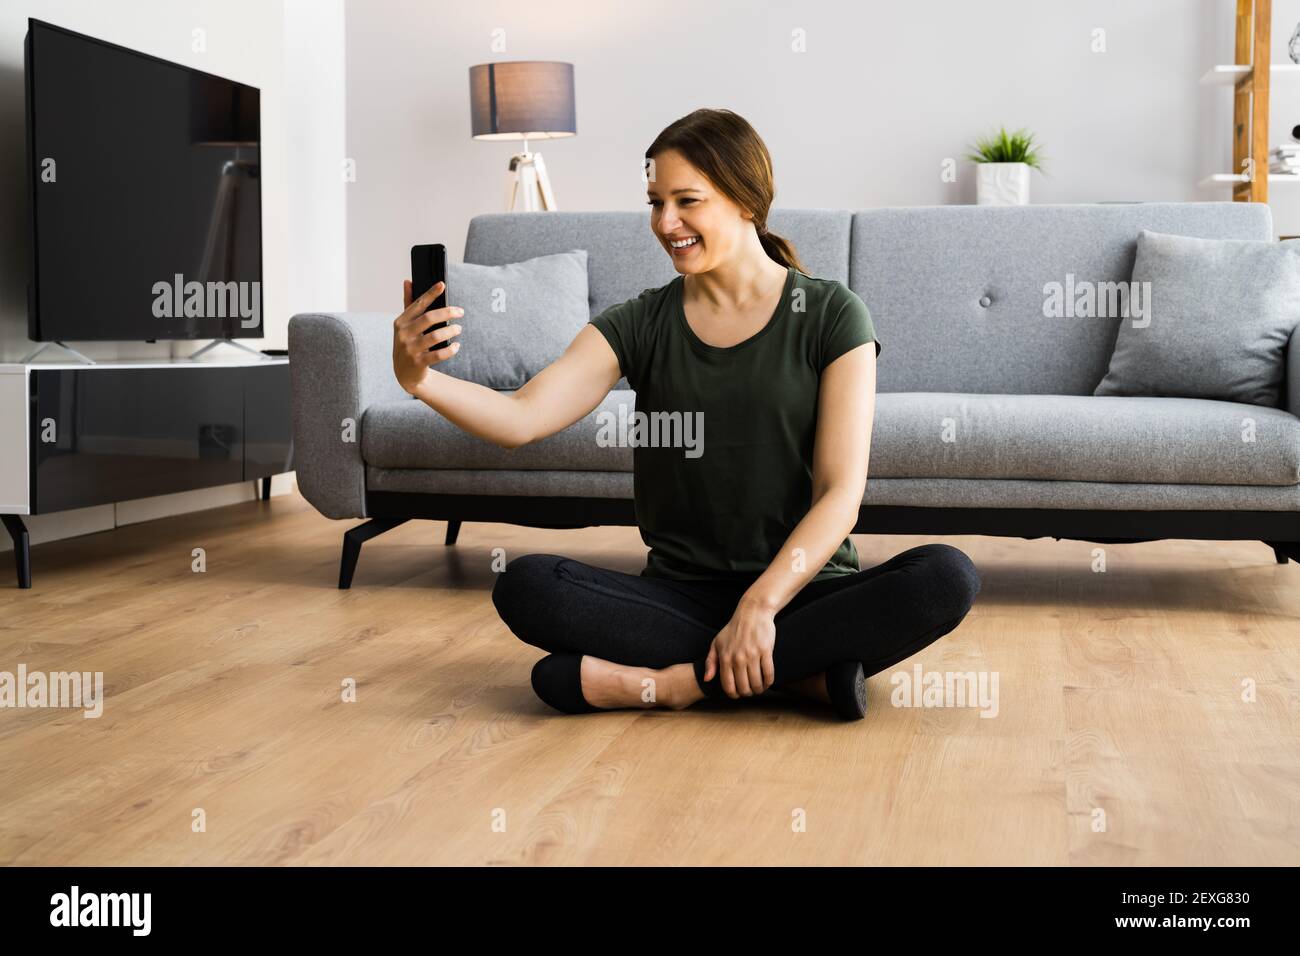 Female Selfie Portrait In Home Living Room Stock Photo